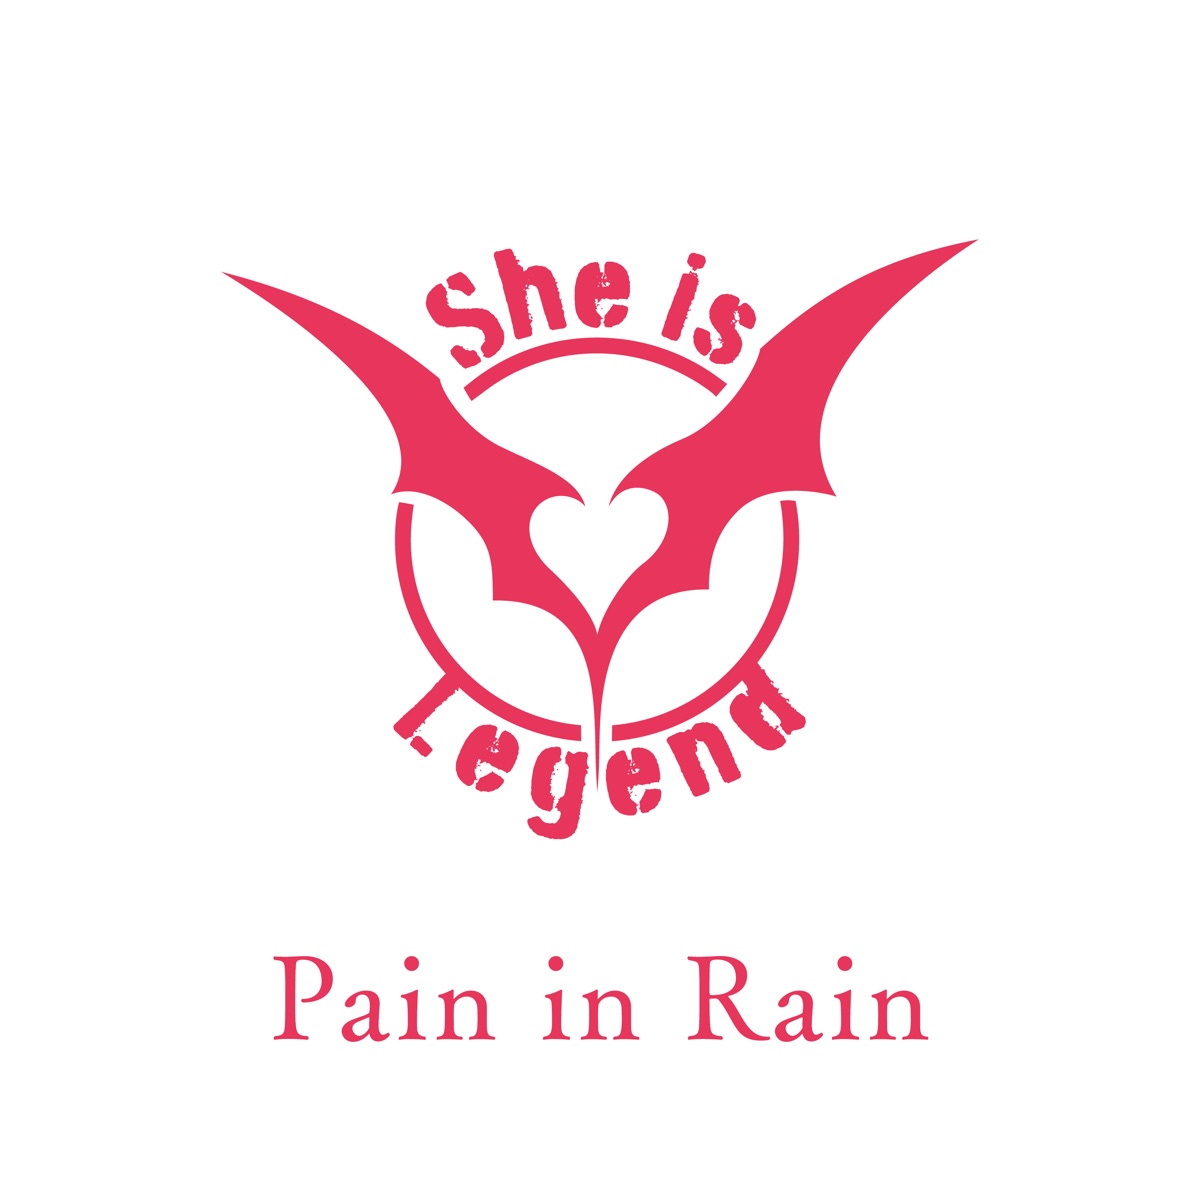 『She is Legend - Pain in Rain 歌詞』収録の『Pain in Rain』ジャケット